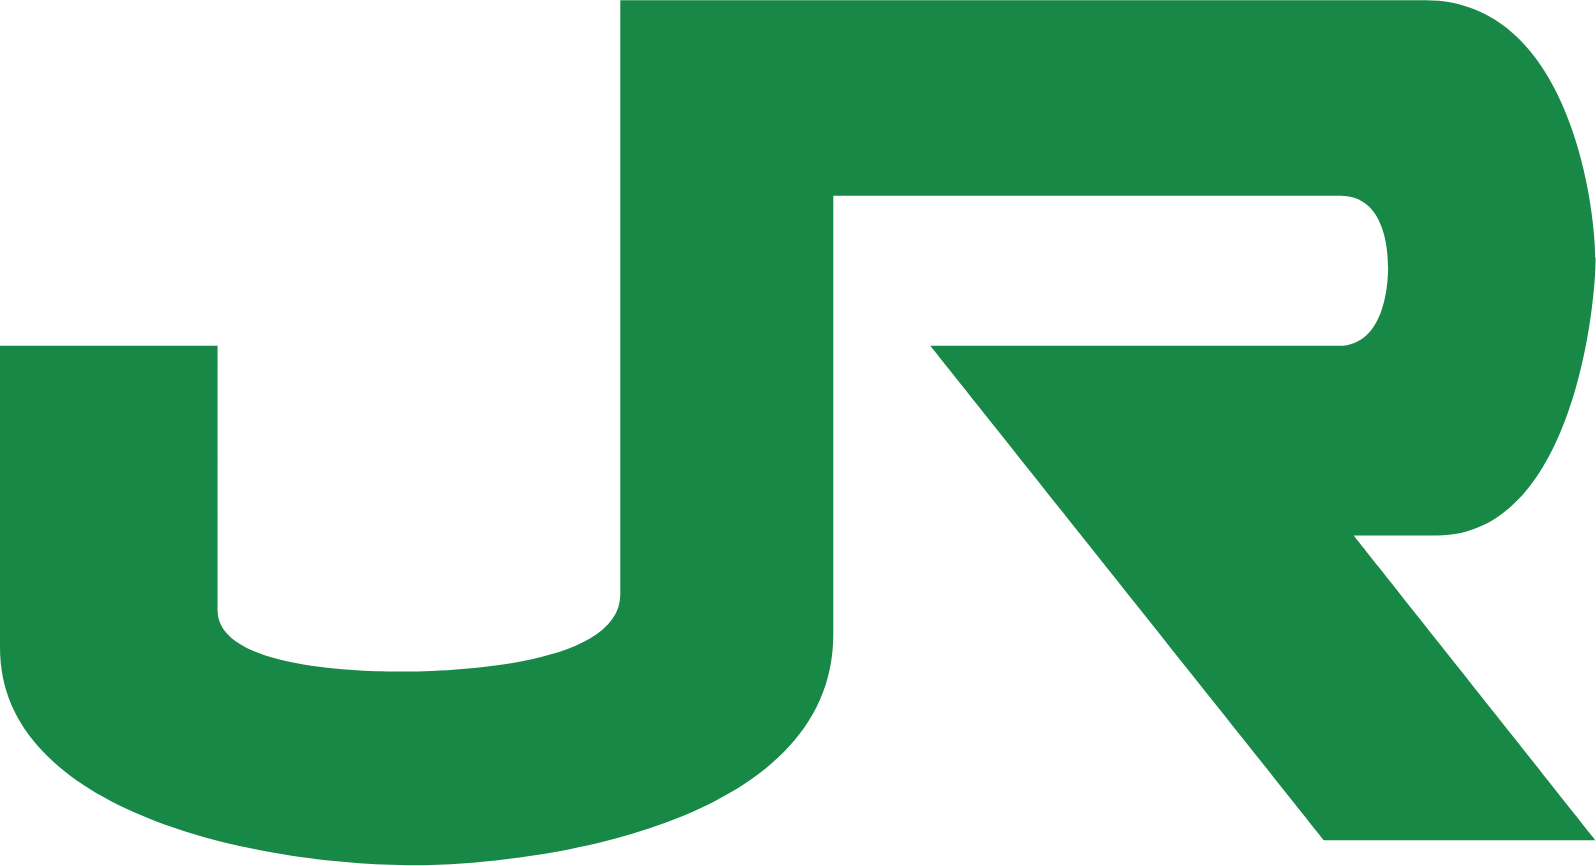 East Japan Railway logo (PNG transparent)